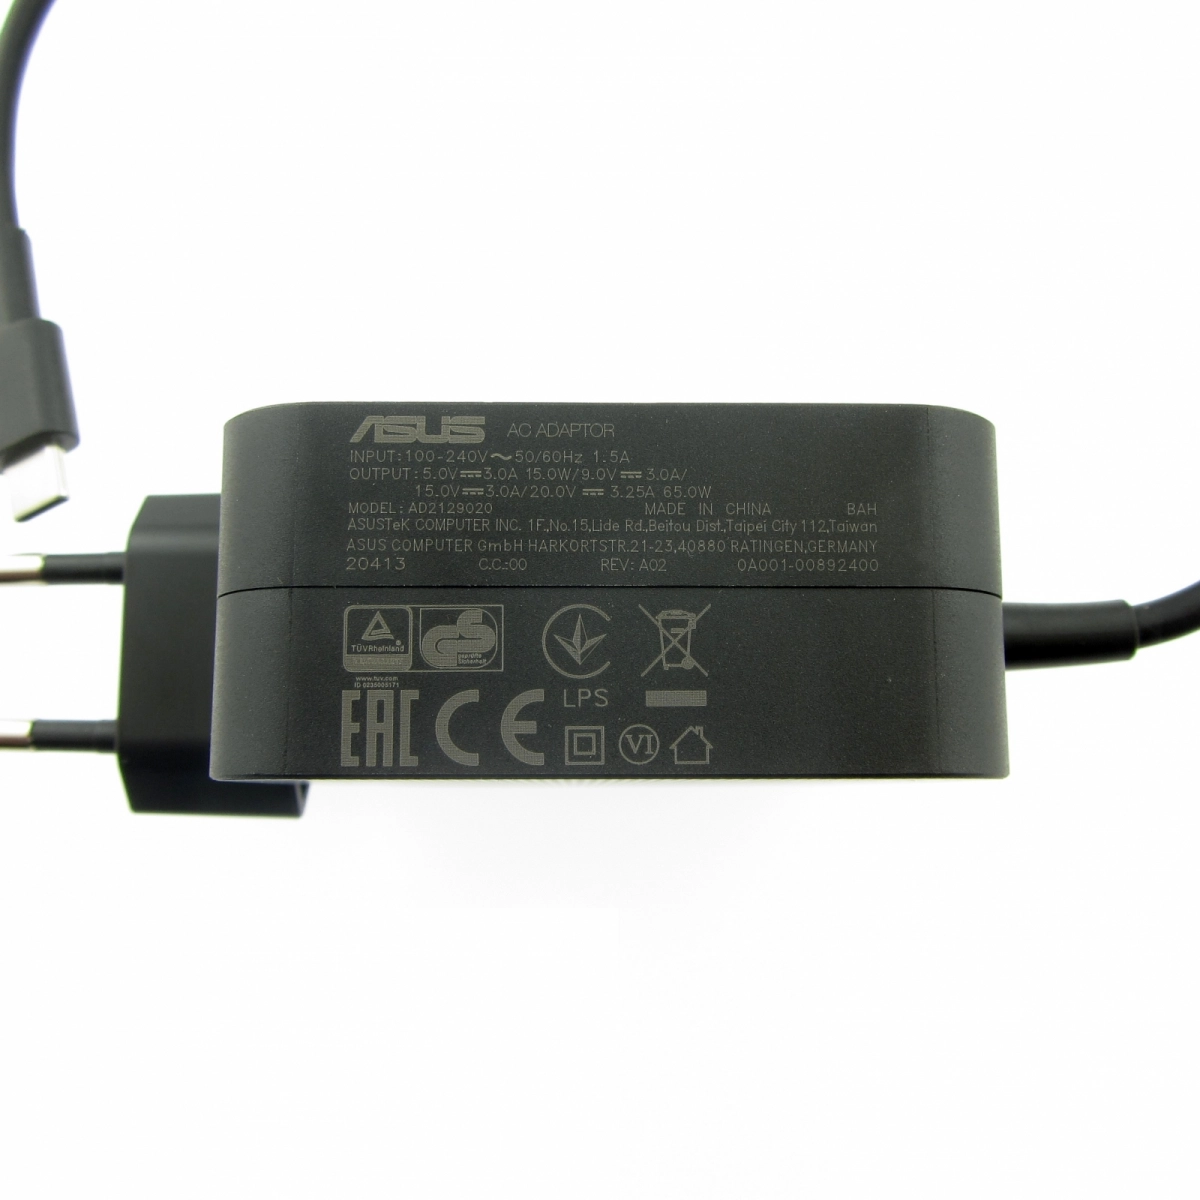 Original Netzteil für ASUS 0A001-00443200, 20V, 3.25A, Stecker USB-C, 65W